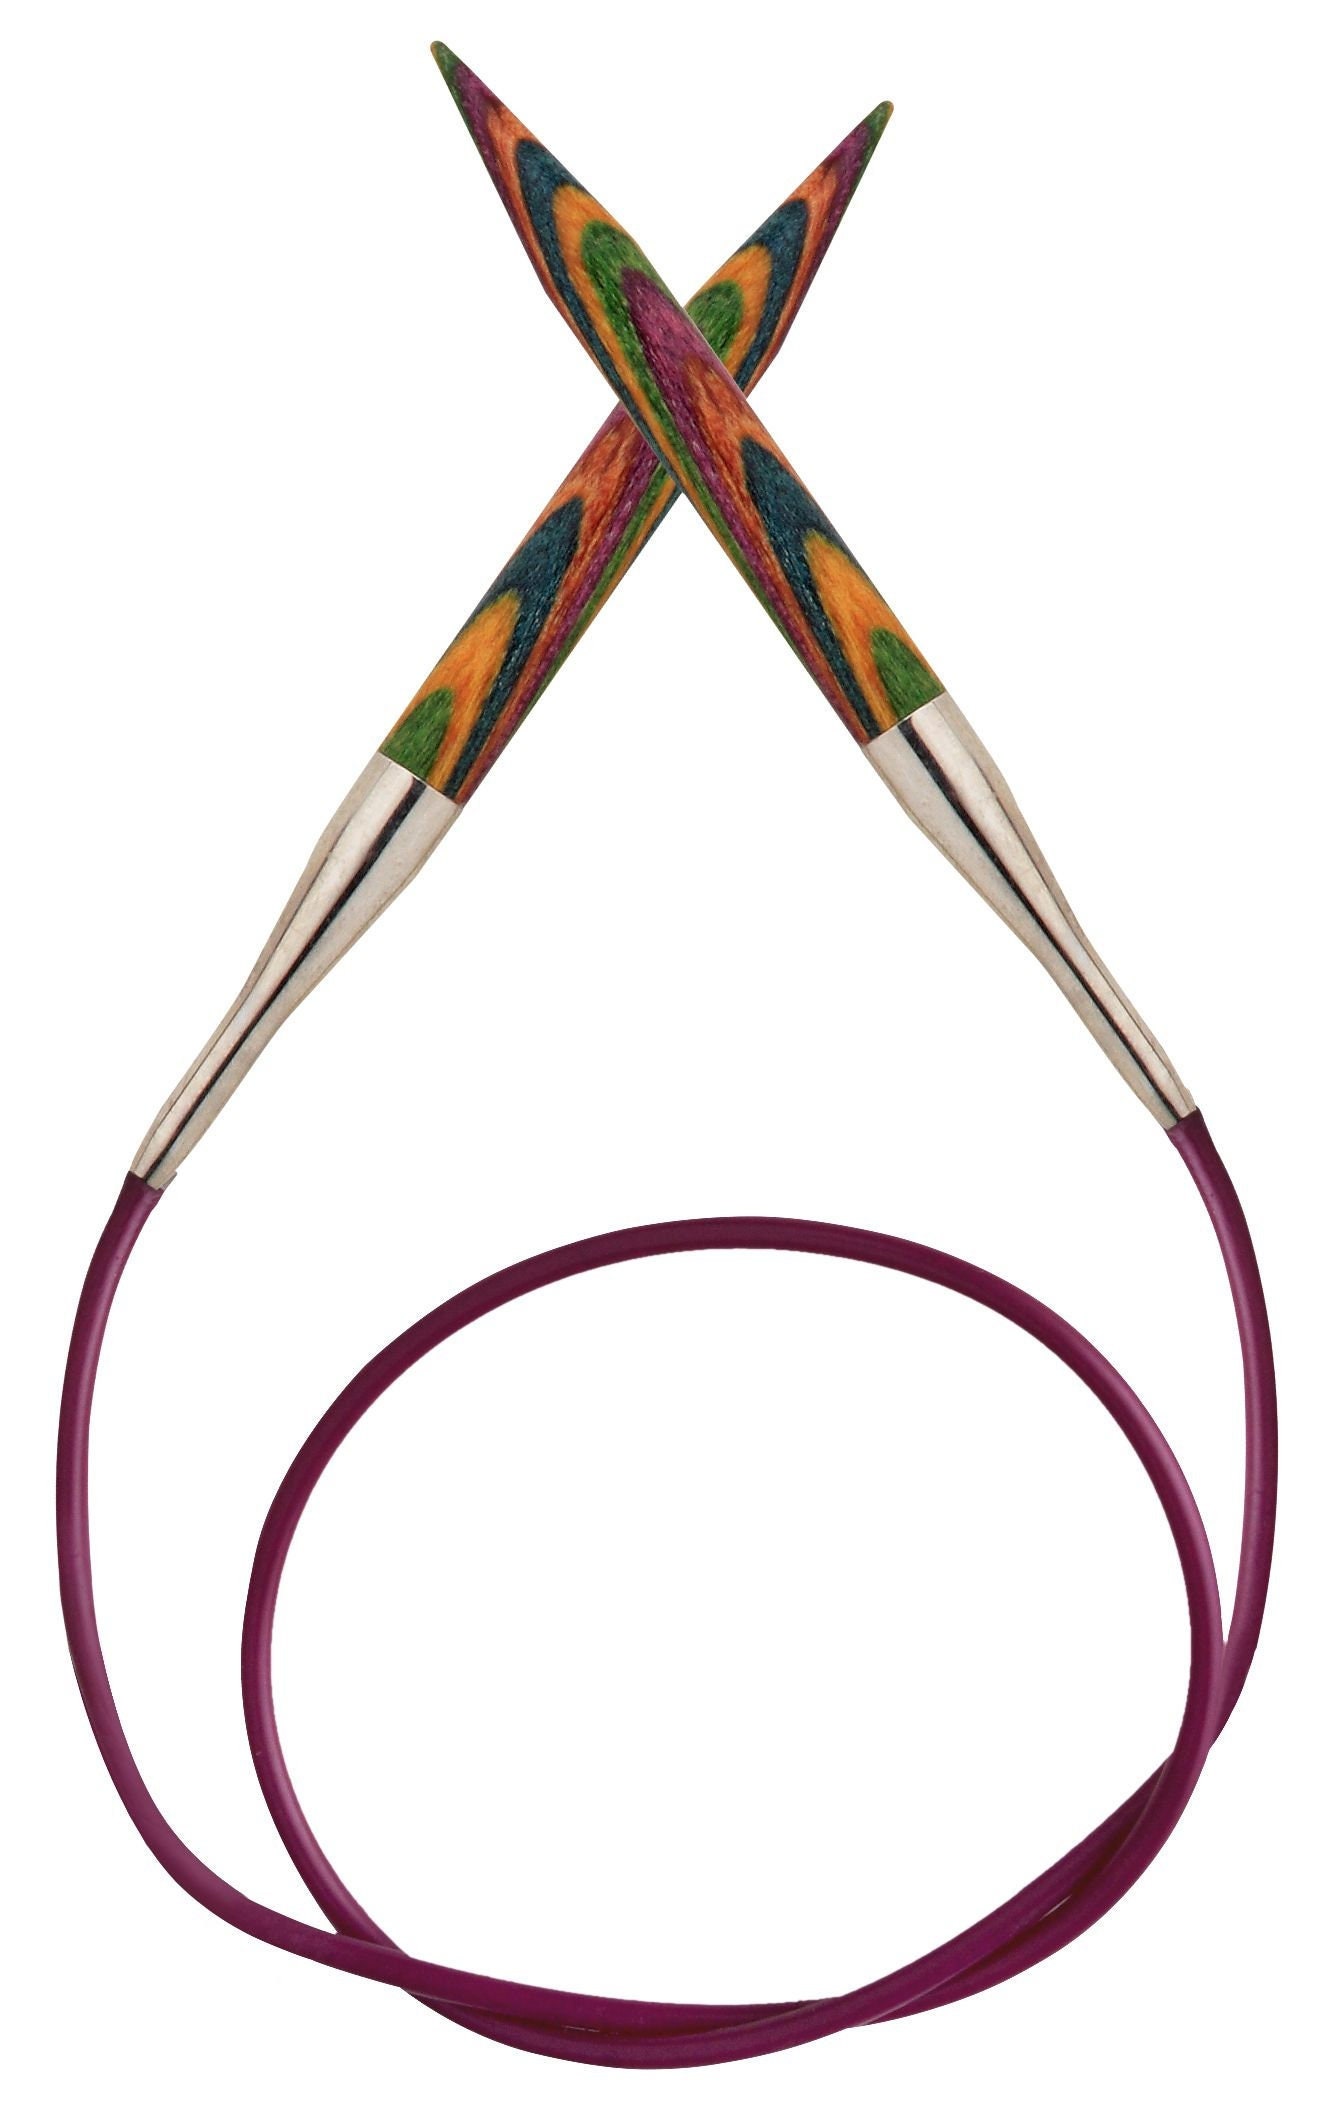 Prym Natural(Symfonie Wood) Interchangeable Circular Knitting Needles/Pins  40cm